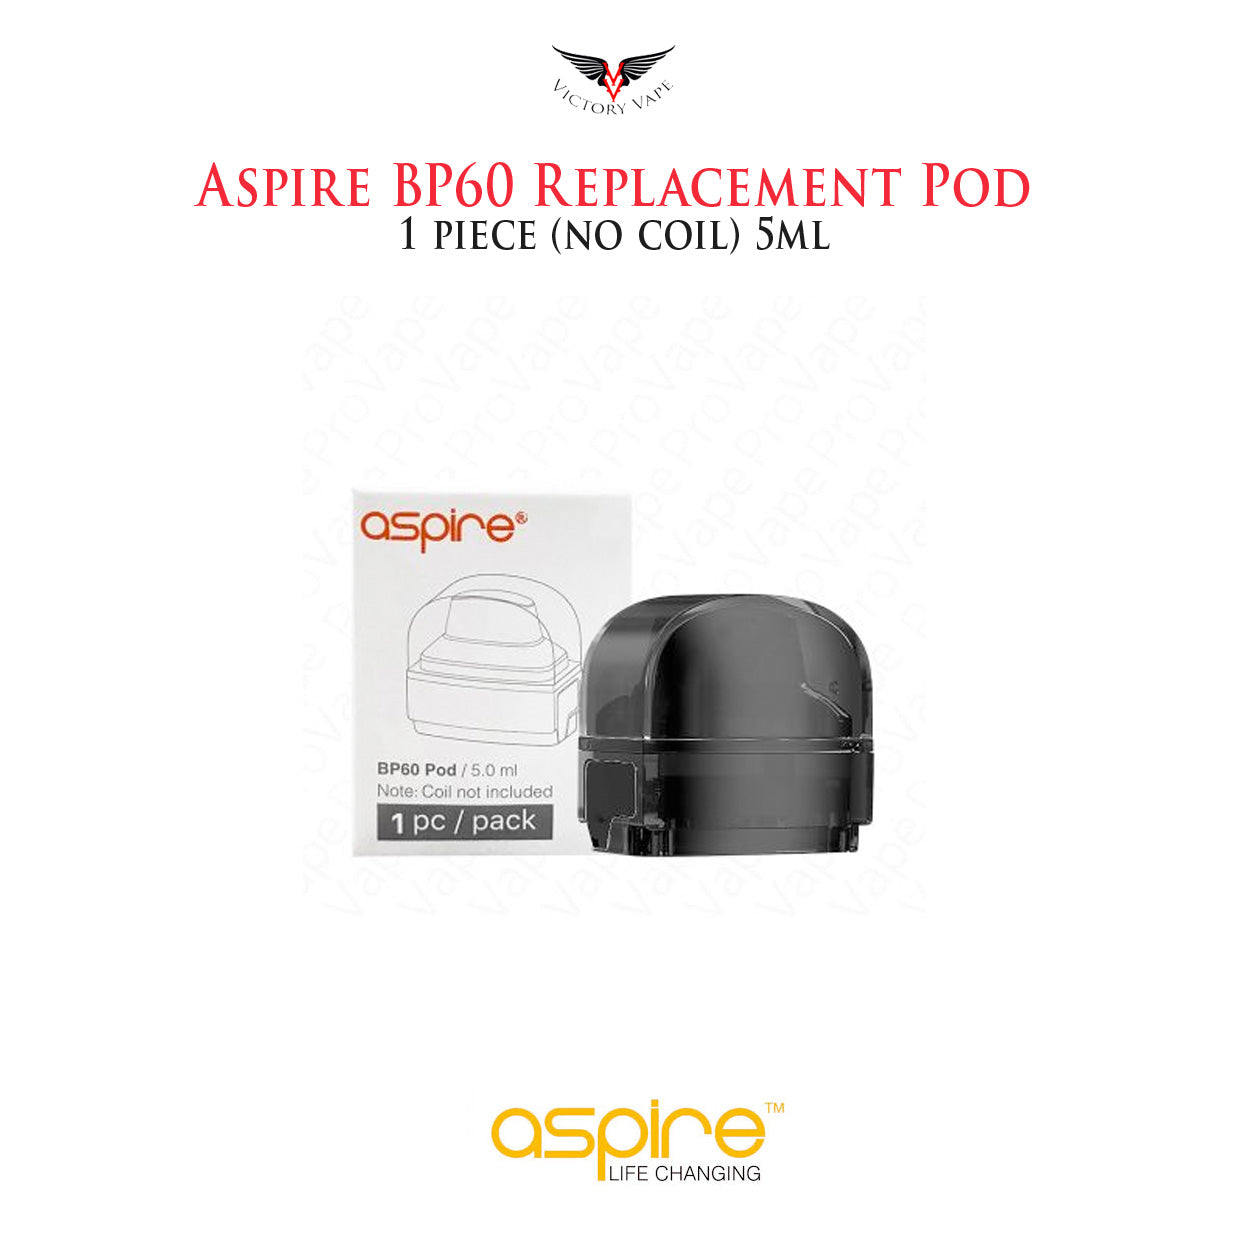  Aspire BP60 60W Replacement Pod Cartridge • 5ml (1 piece no coil) 